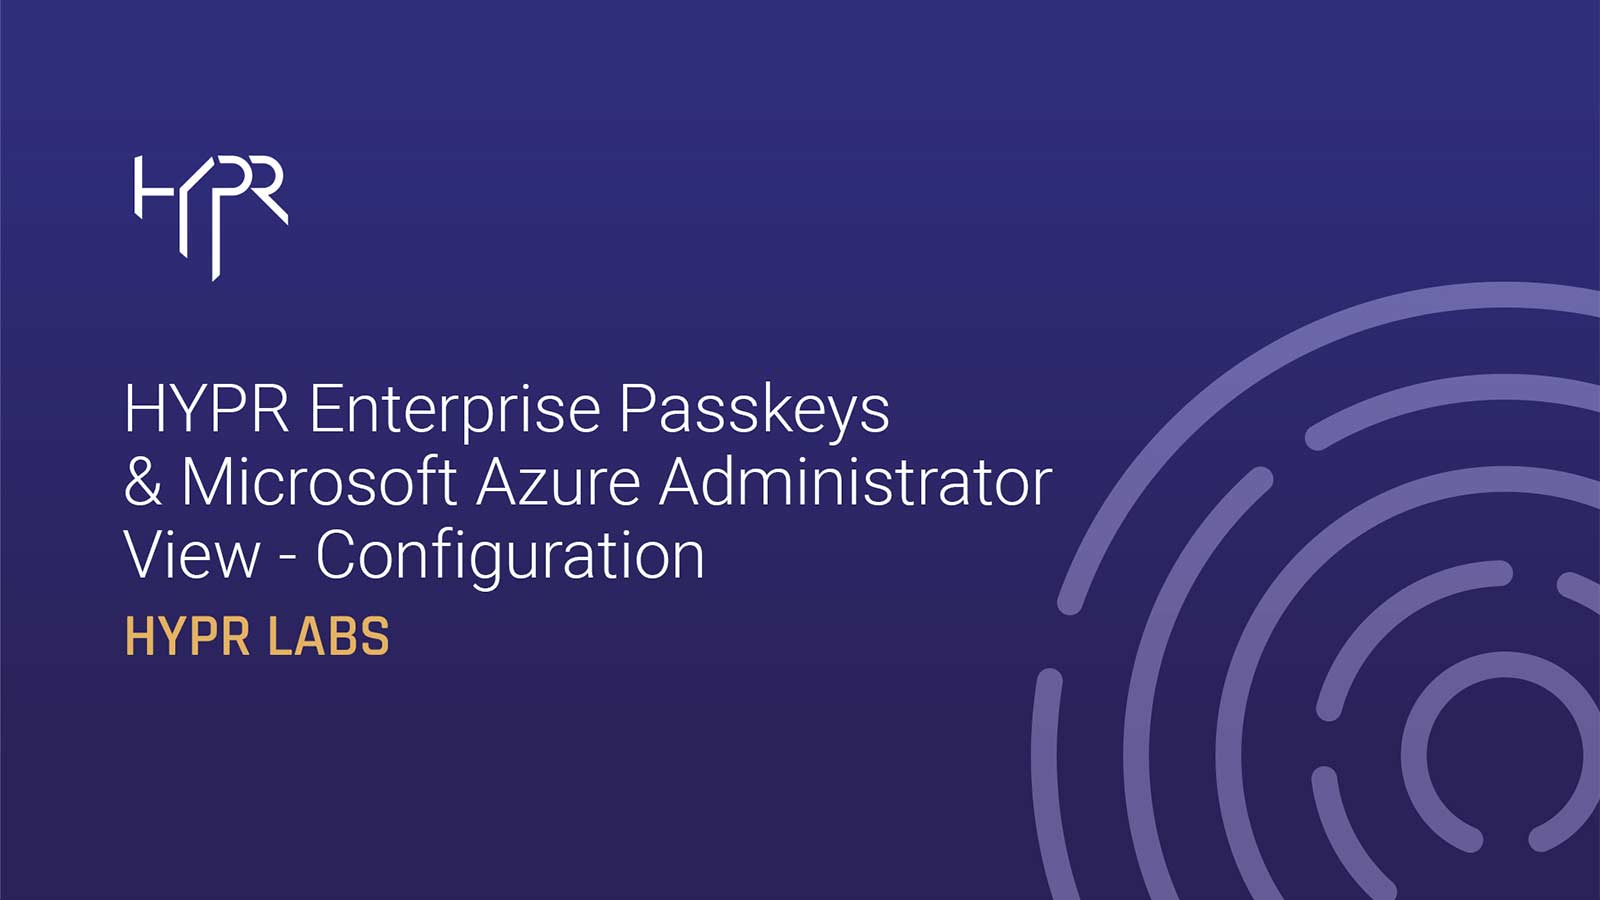 Configuring HYPR Enterprise Passkeys for Microsoft Azure